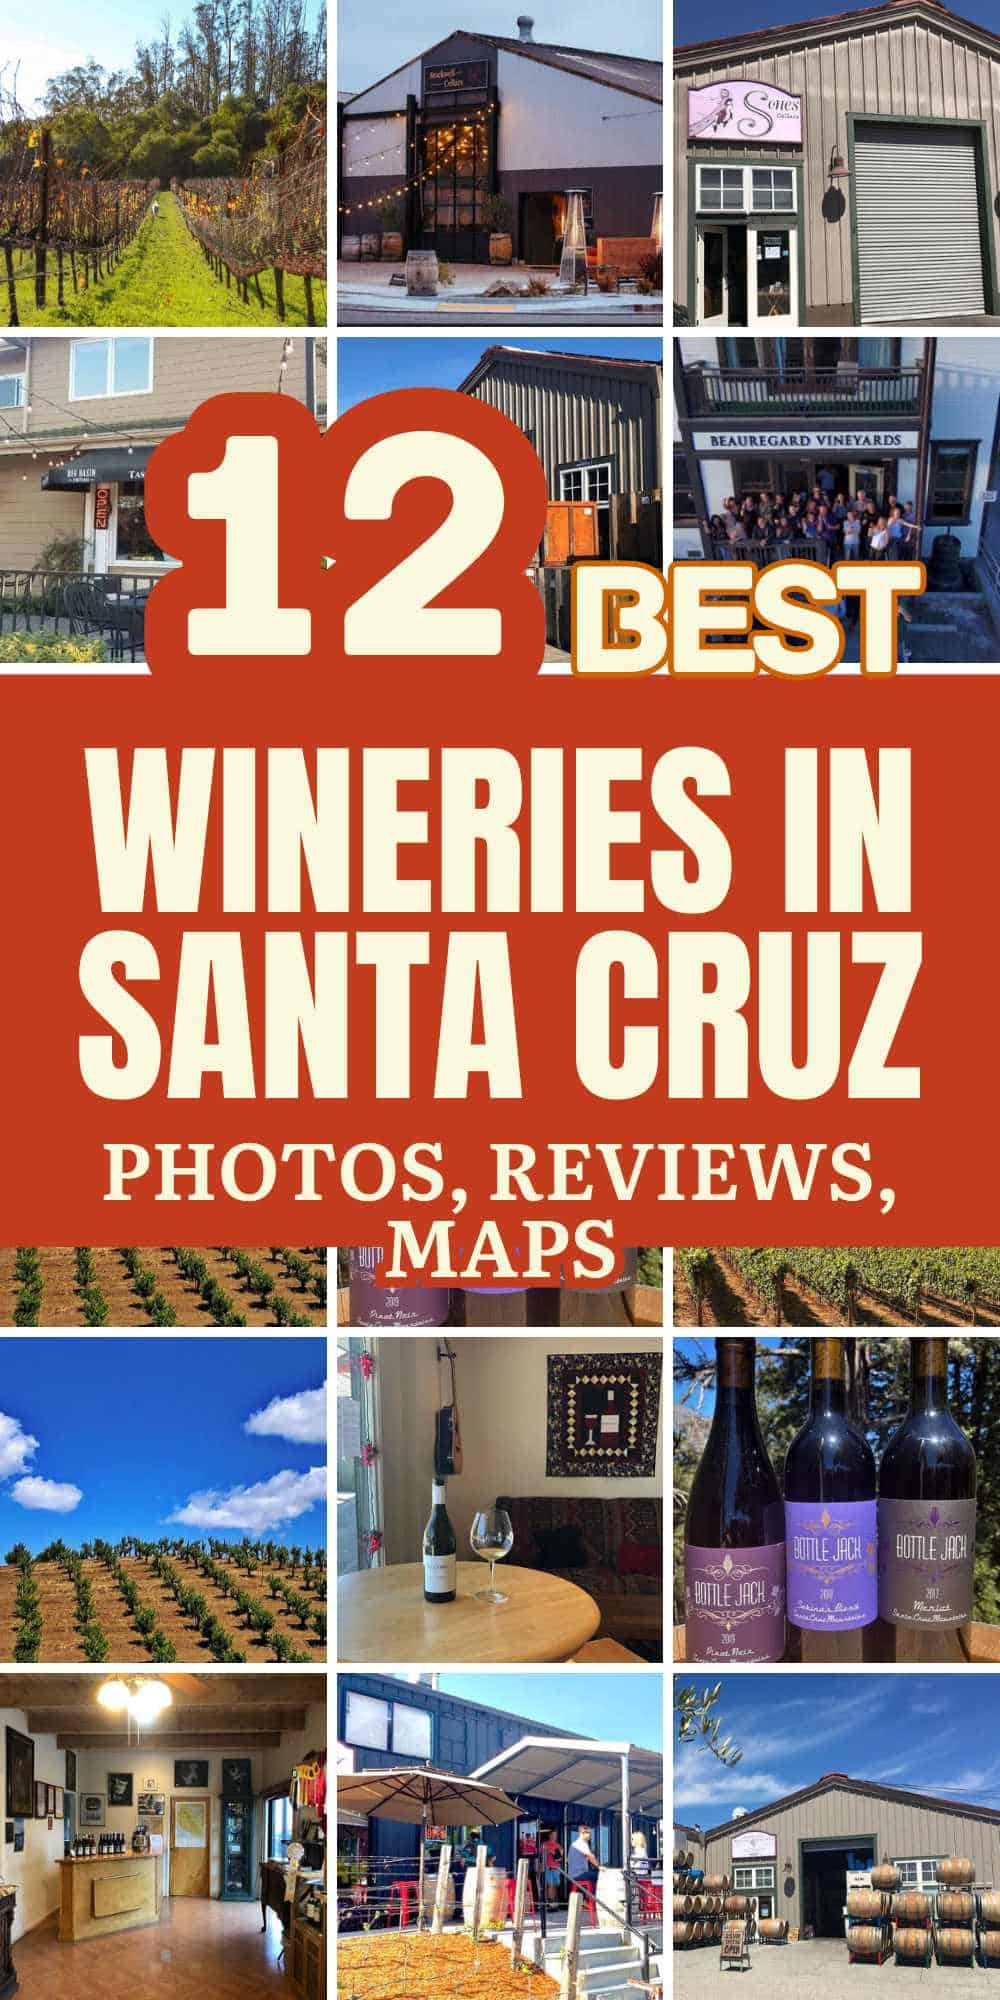 Wineries in Santa Cruz